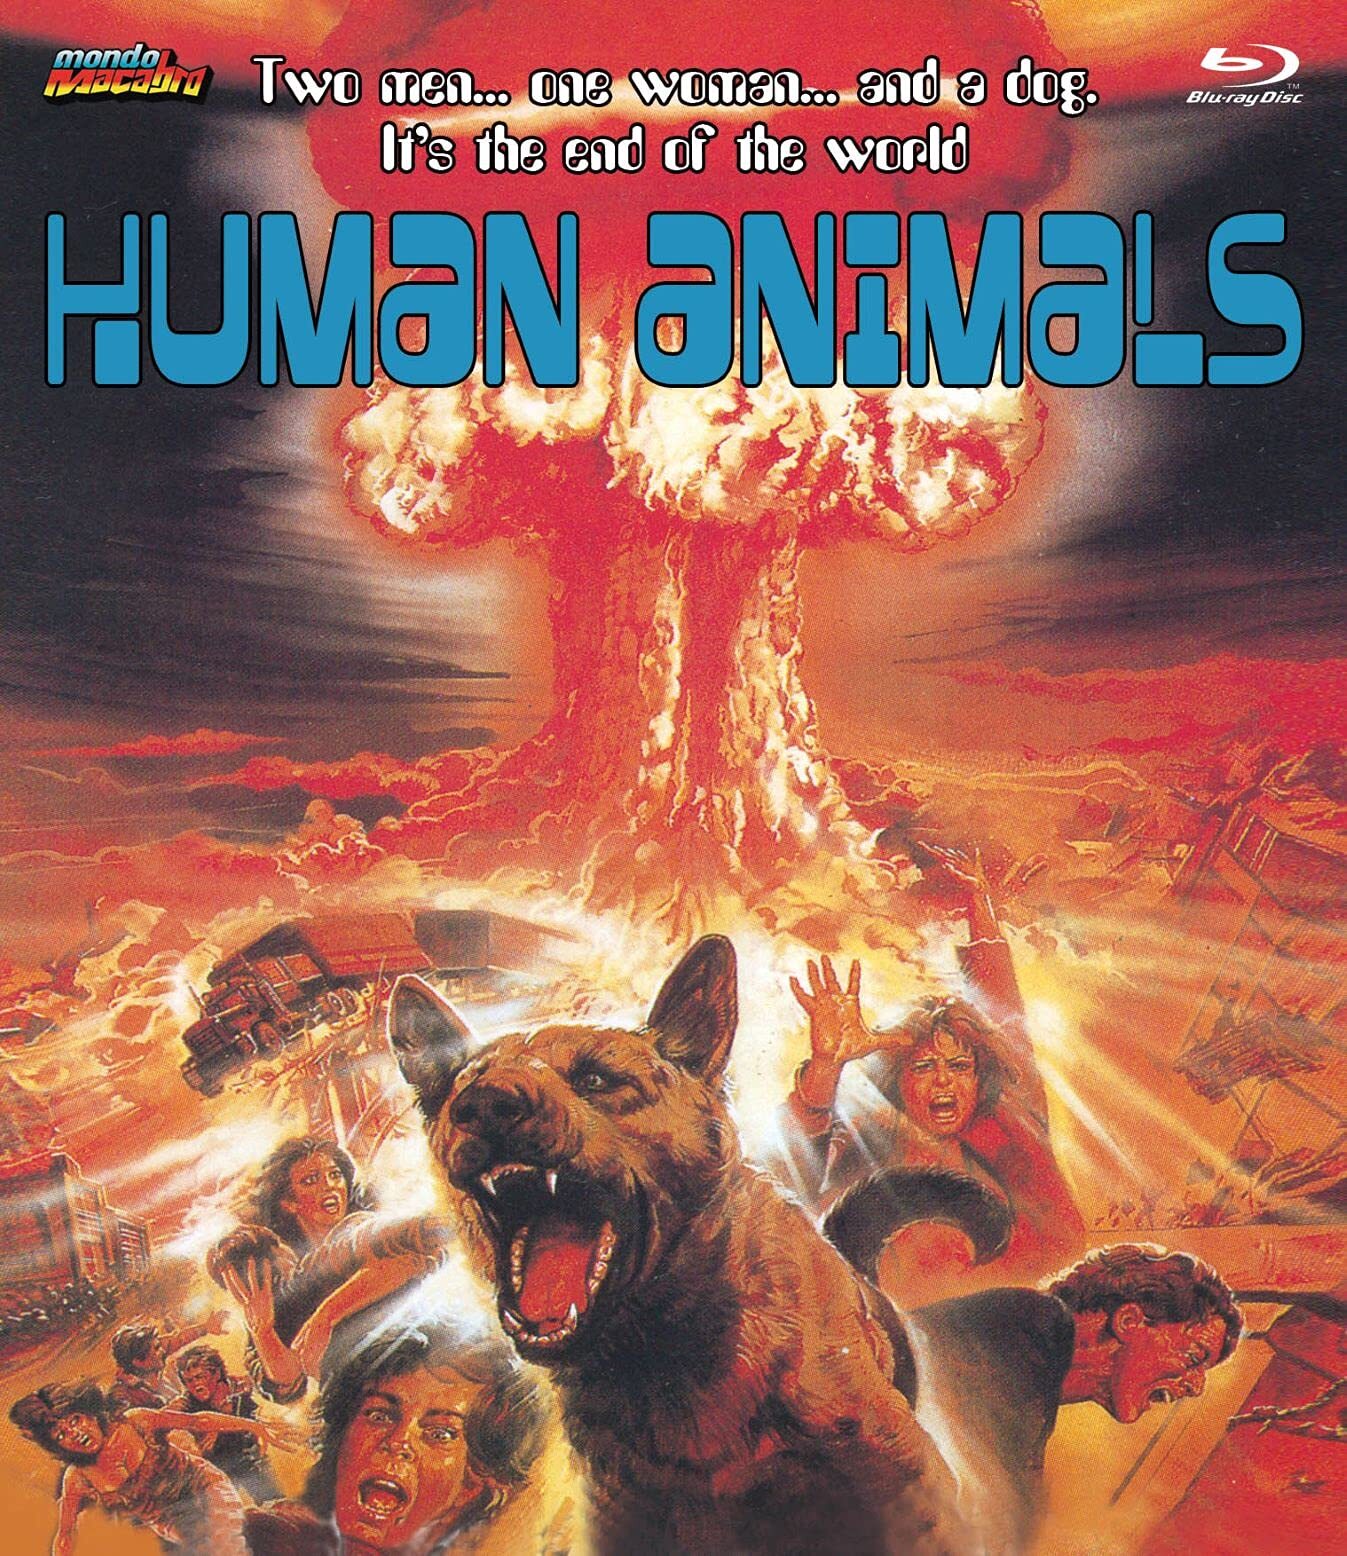 Human Animals Blu-ray Review (Mondo Macabro) - Cultsploitation